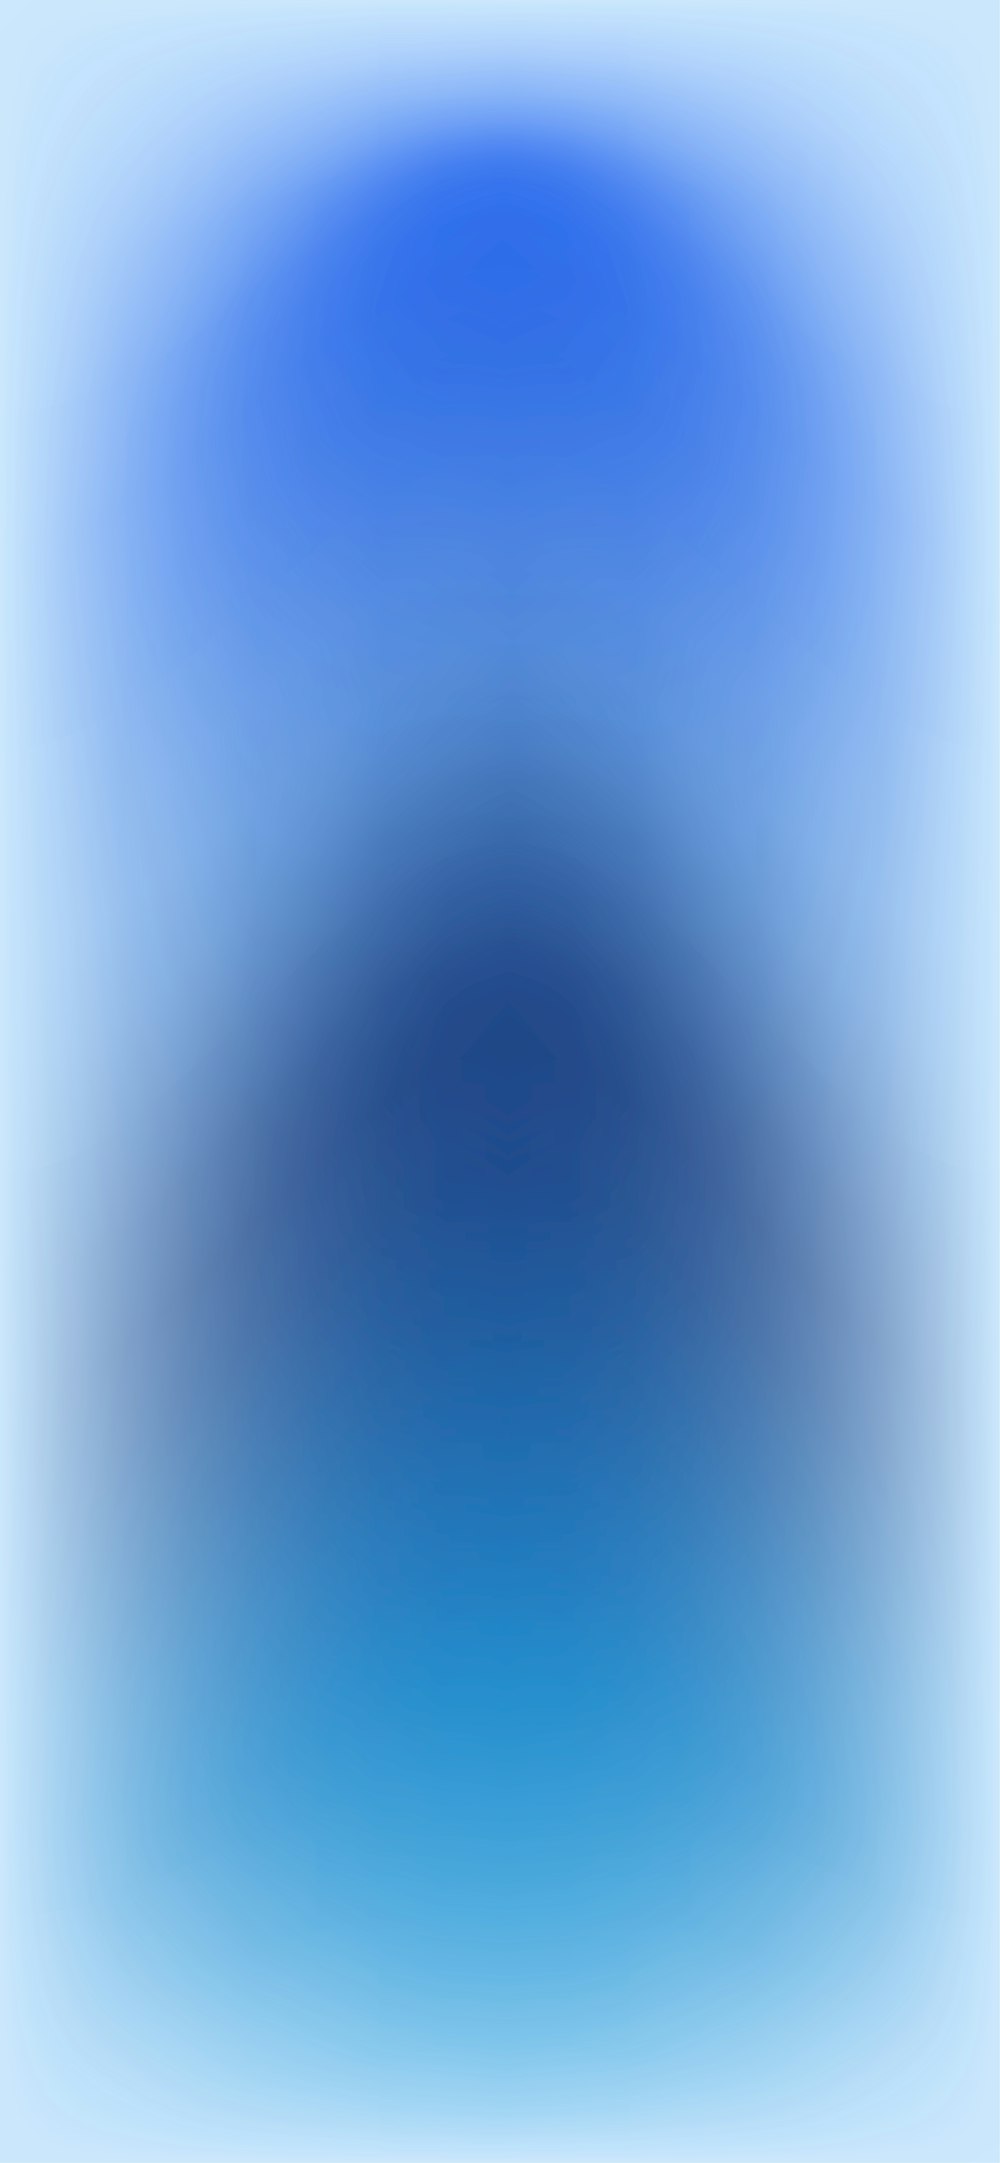 a blurry image of a blue sky